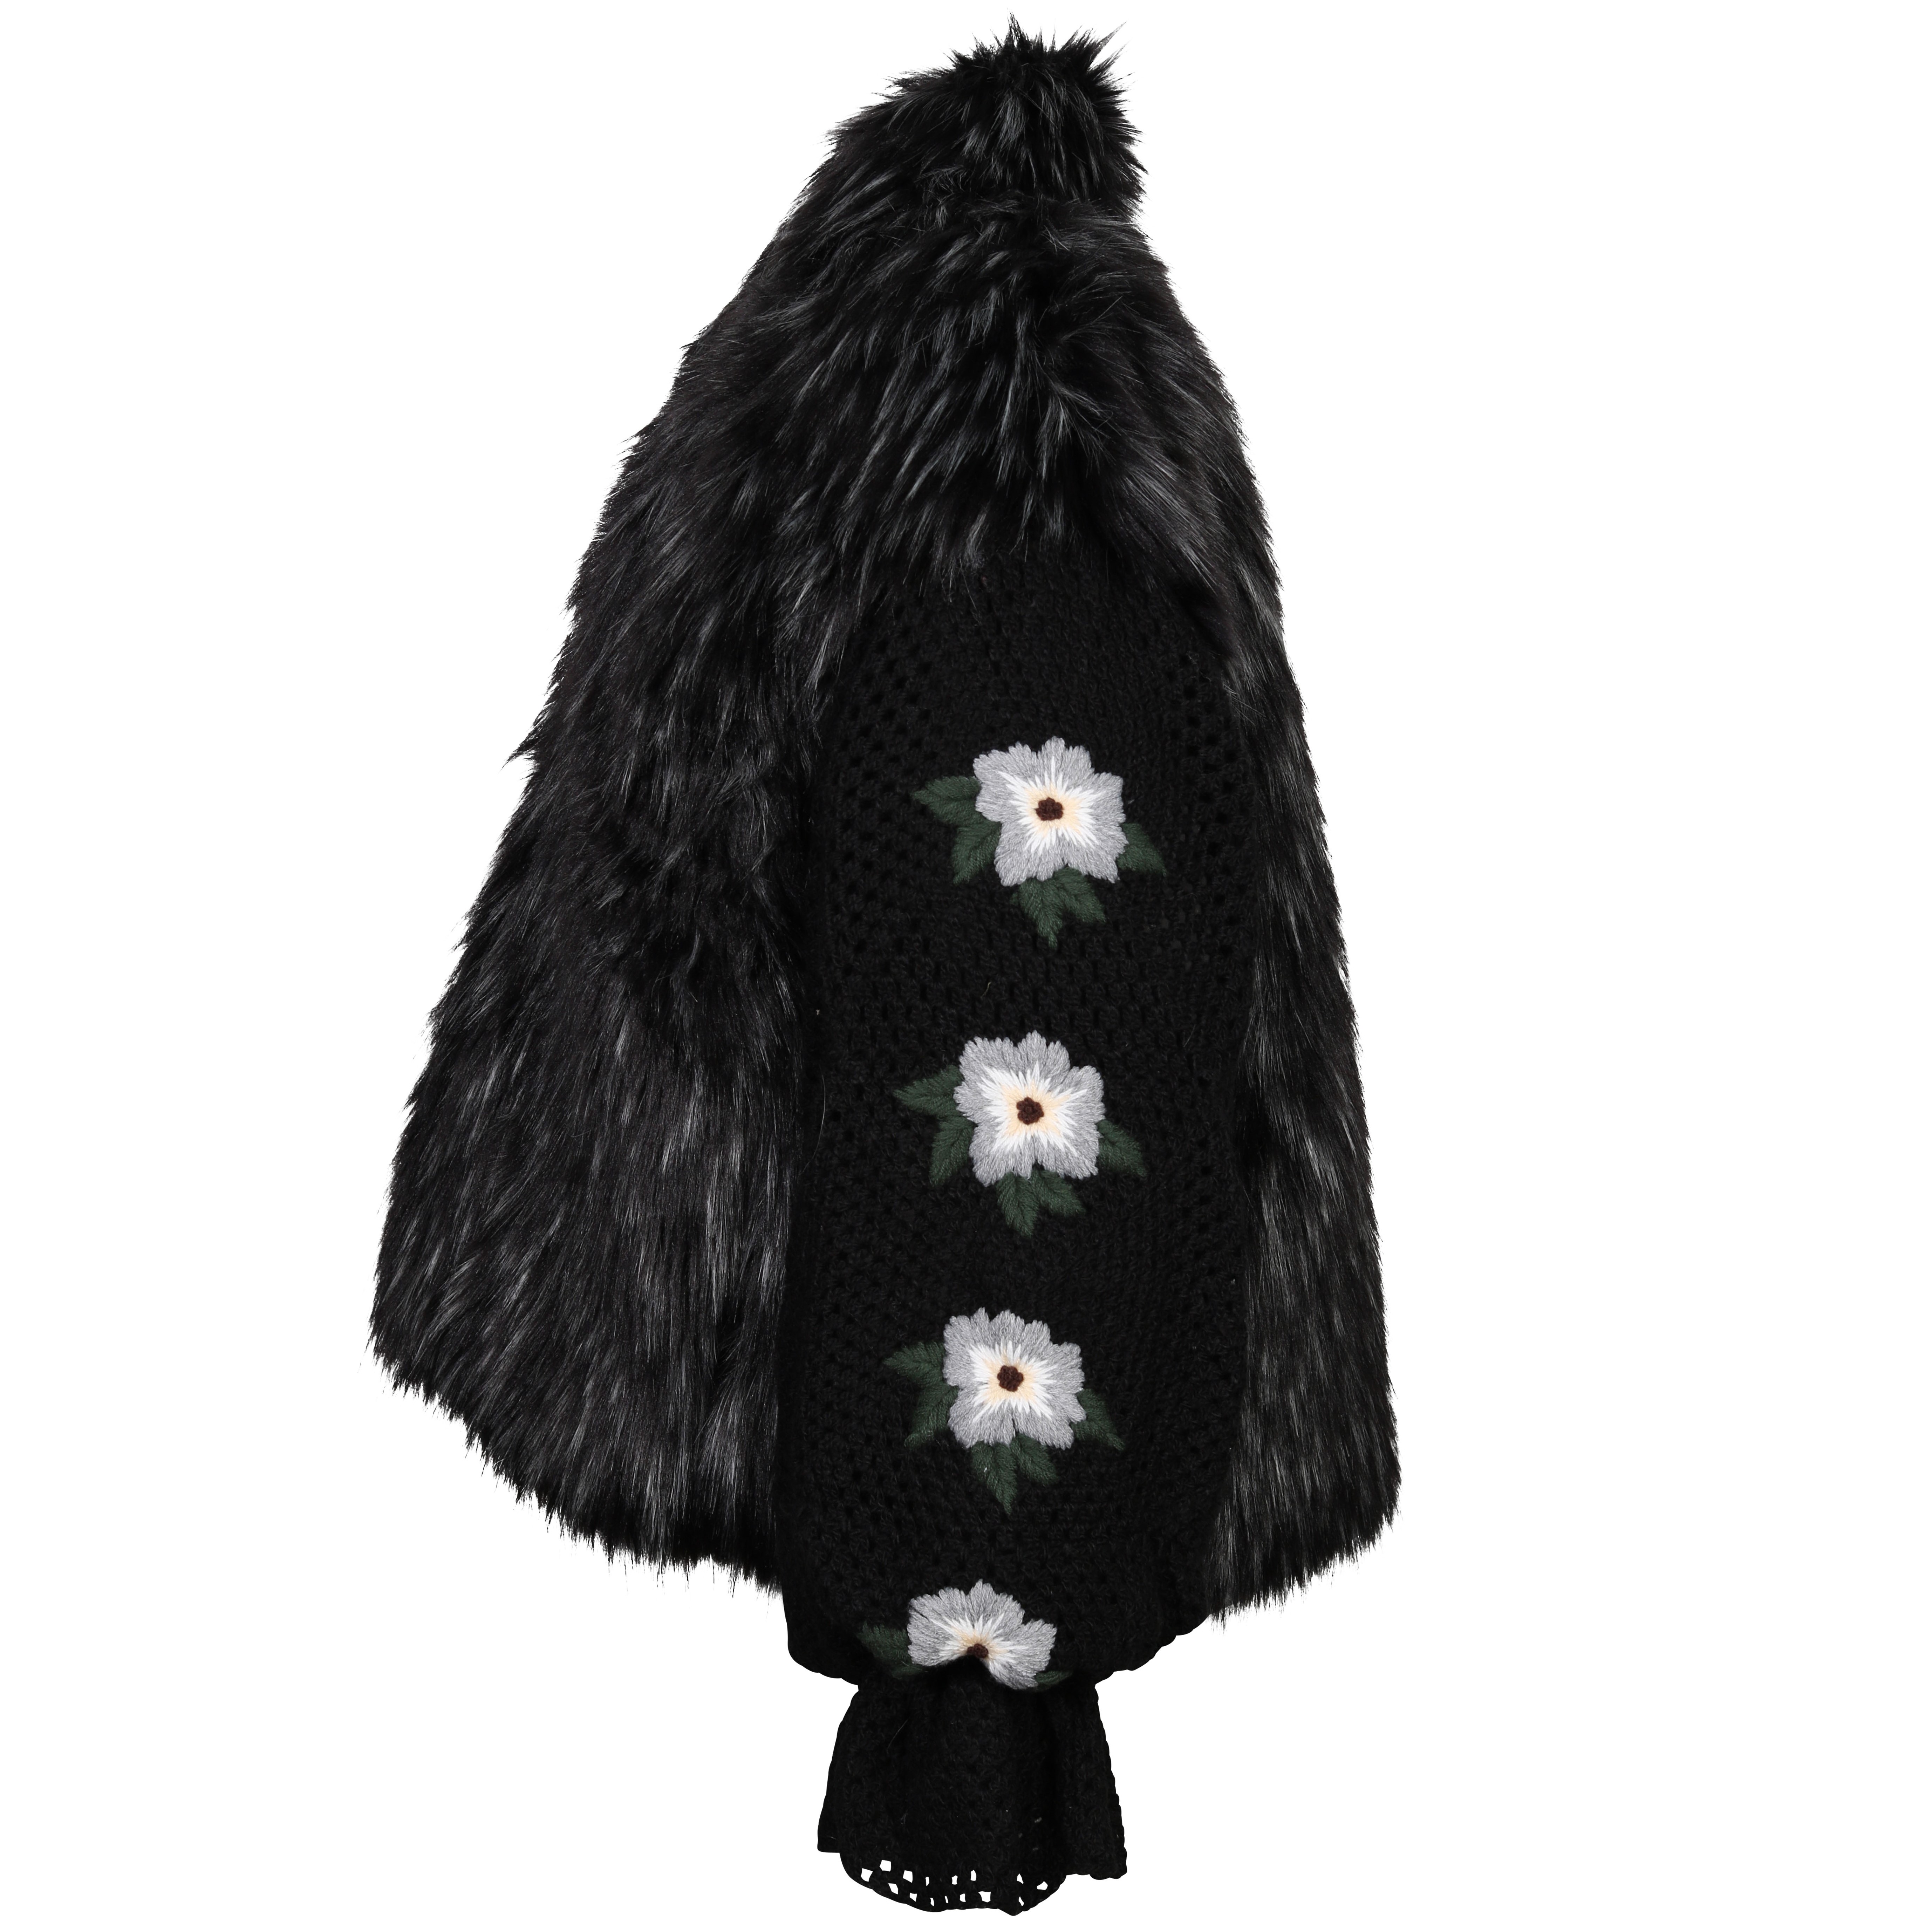 Tu Lizé Black and Silver Eco Fox Fur with Crochet Sleeves